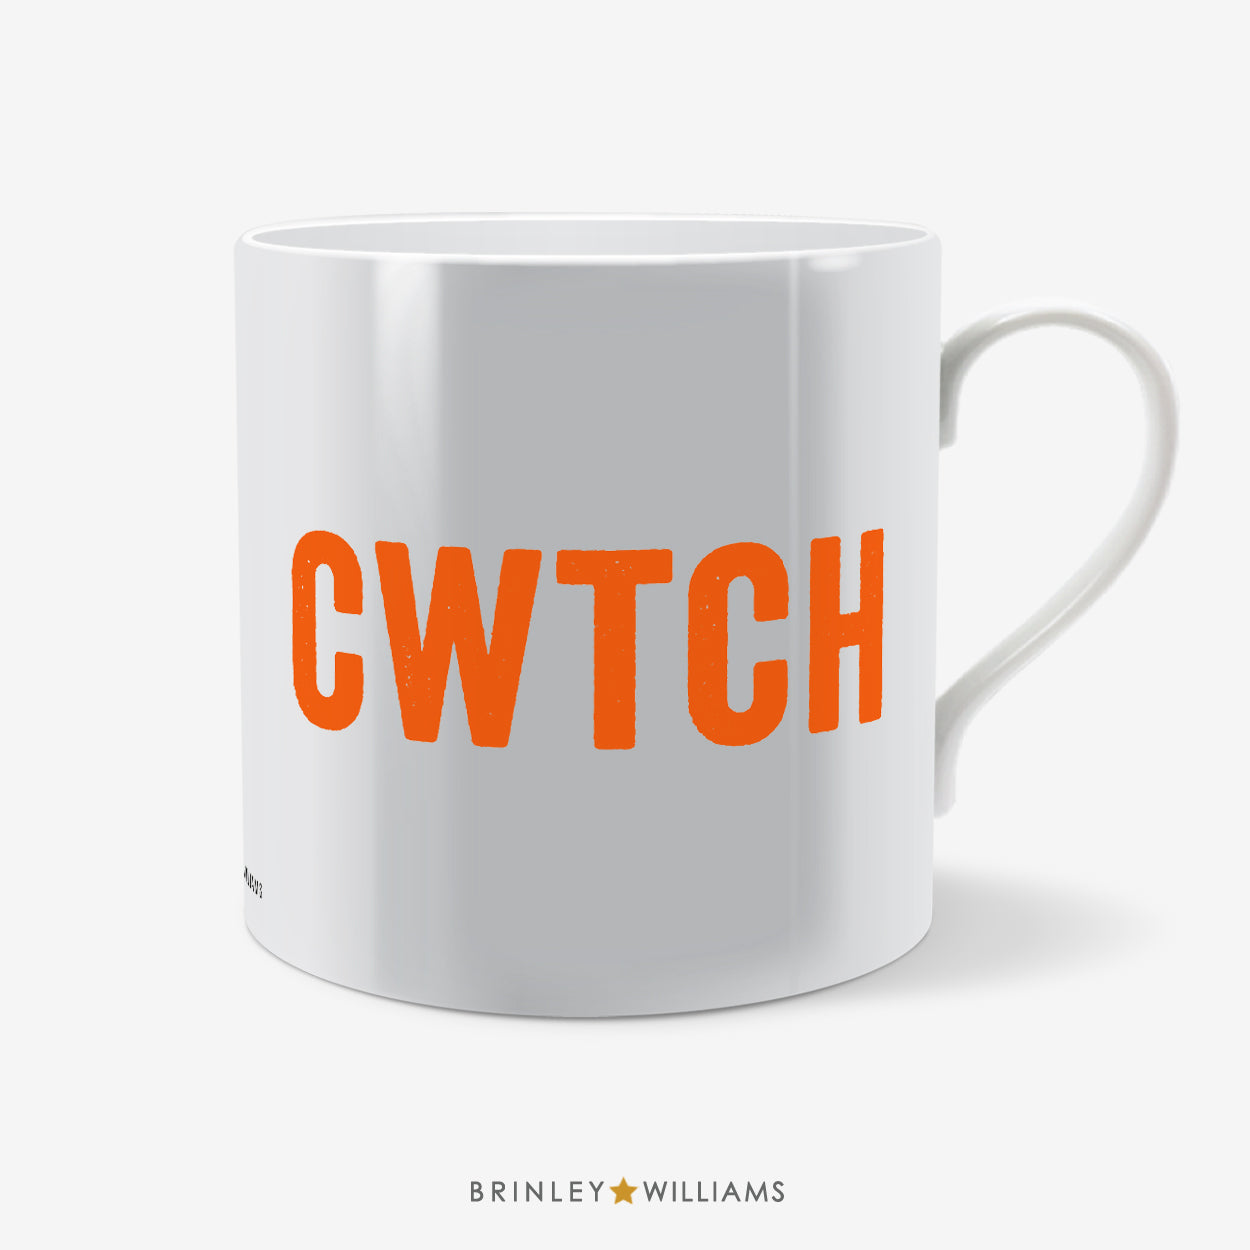 Cwtch Welsh Mug - Orange